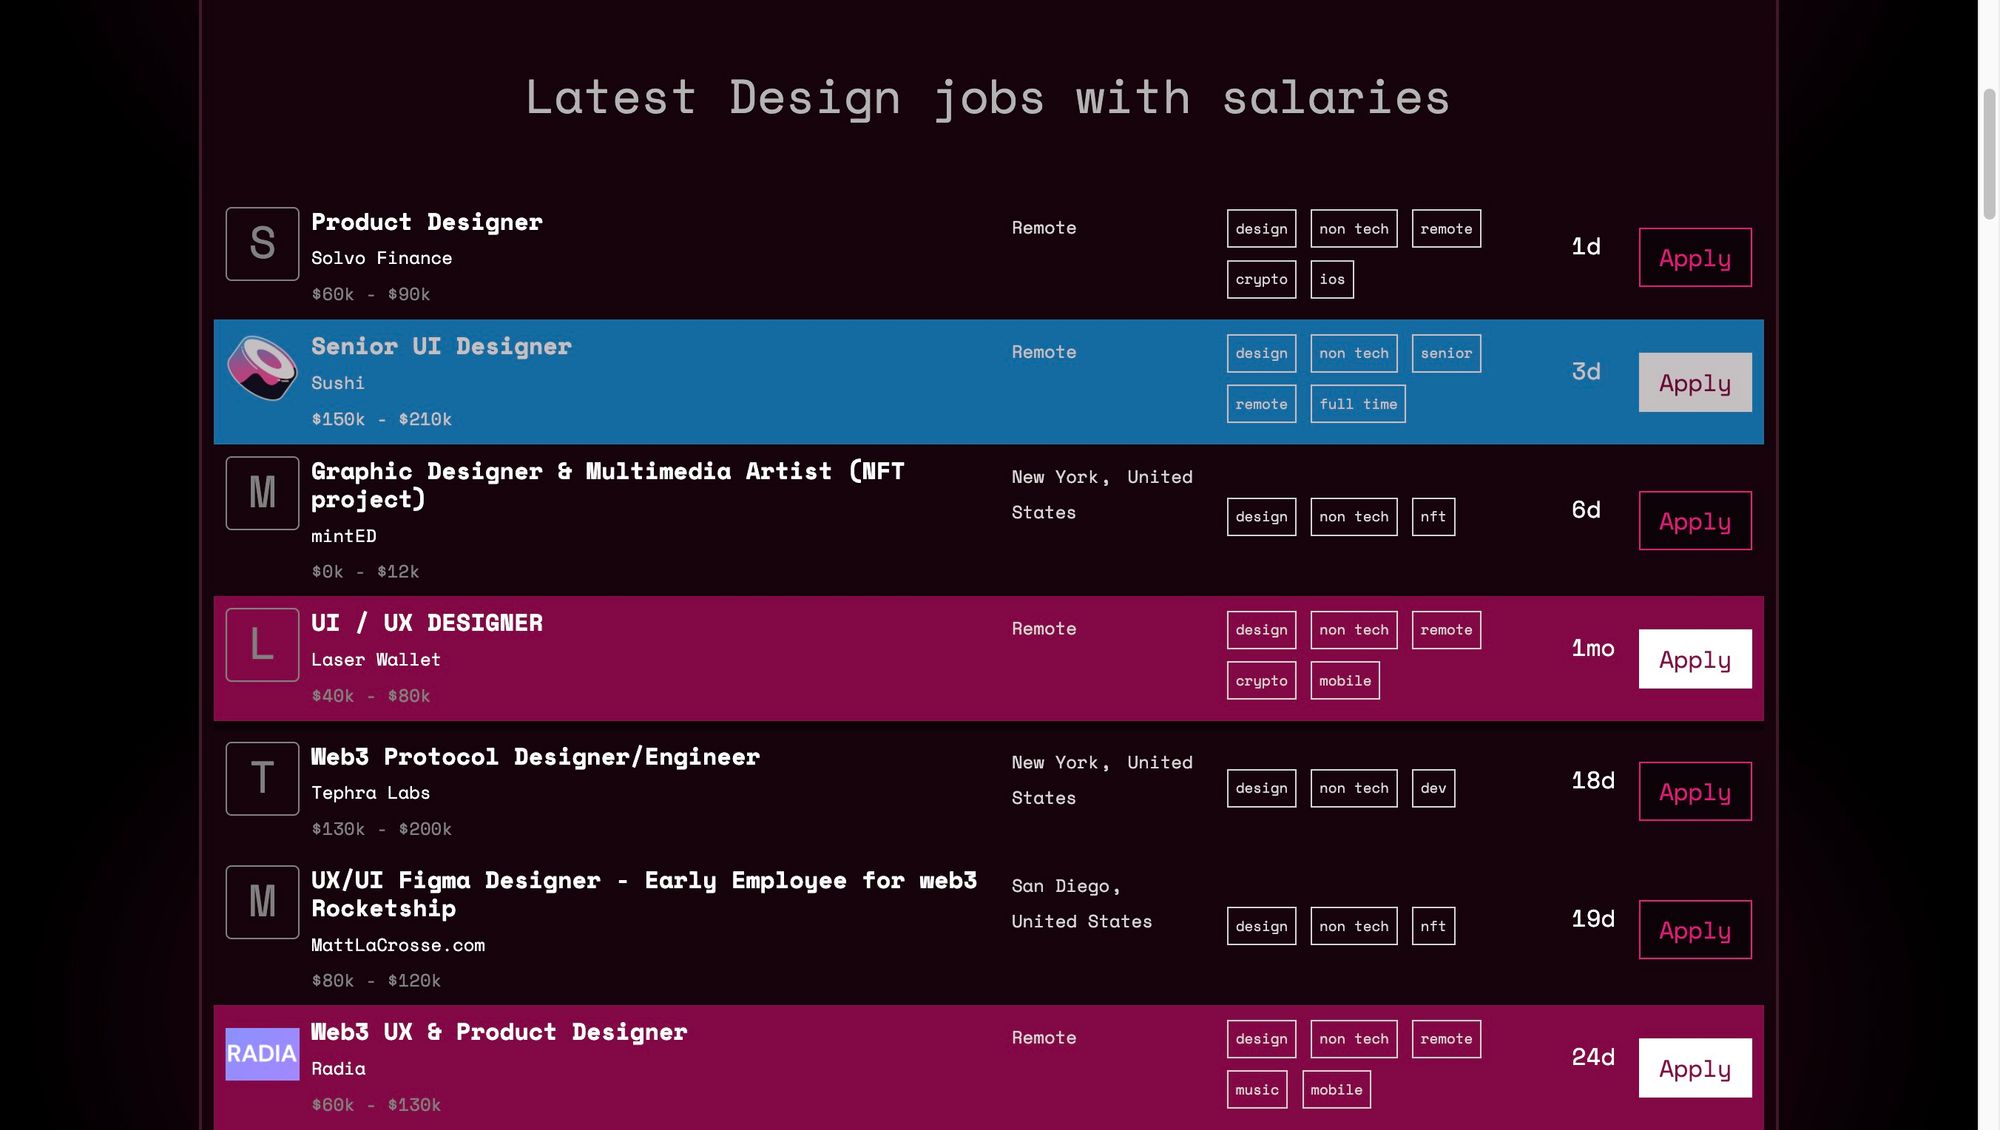 Web3 Design Jobs with Salaries